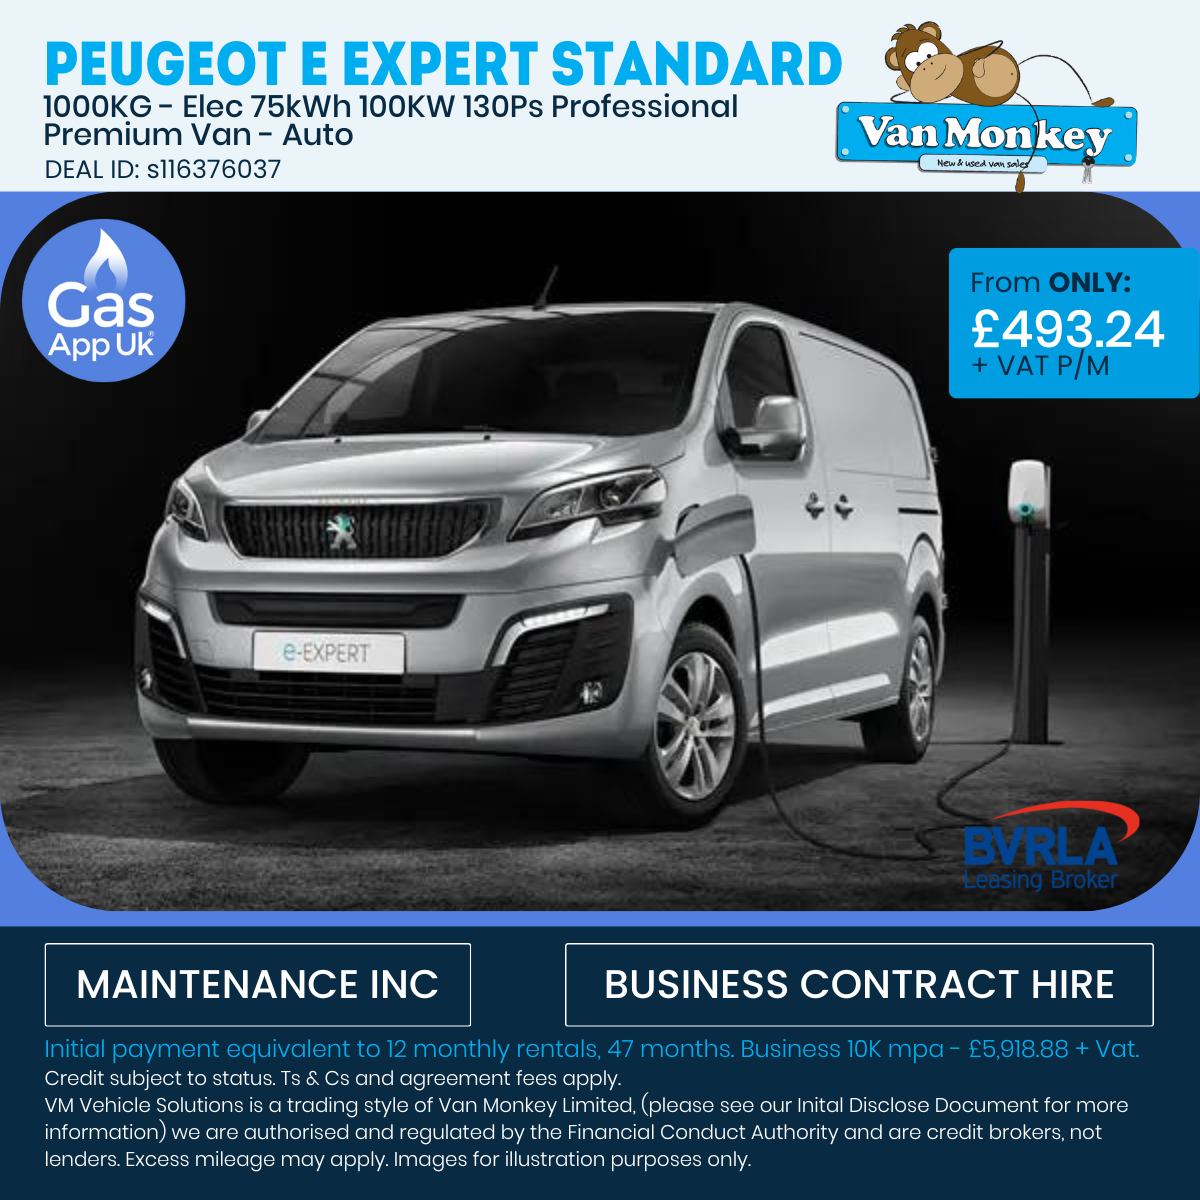 Peugeot e-Expert - Gas App